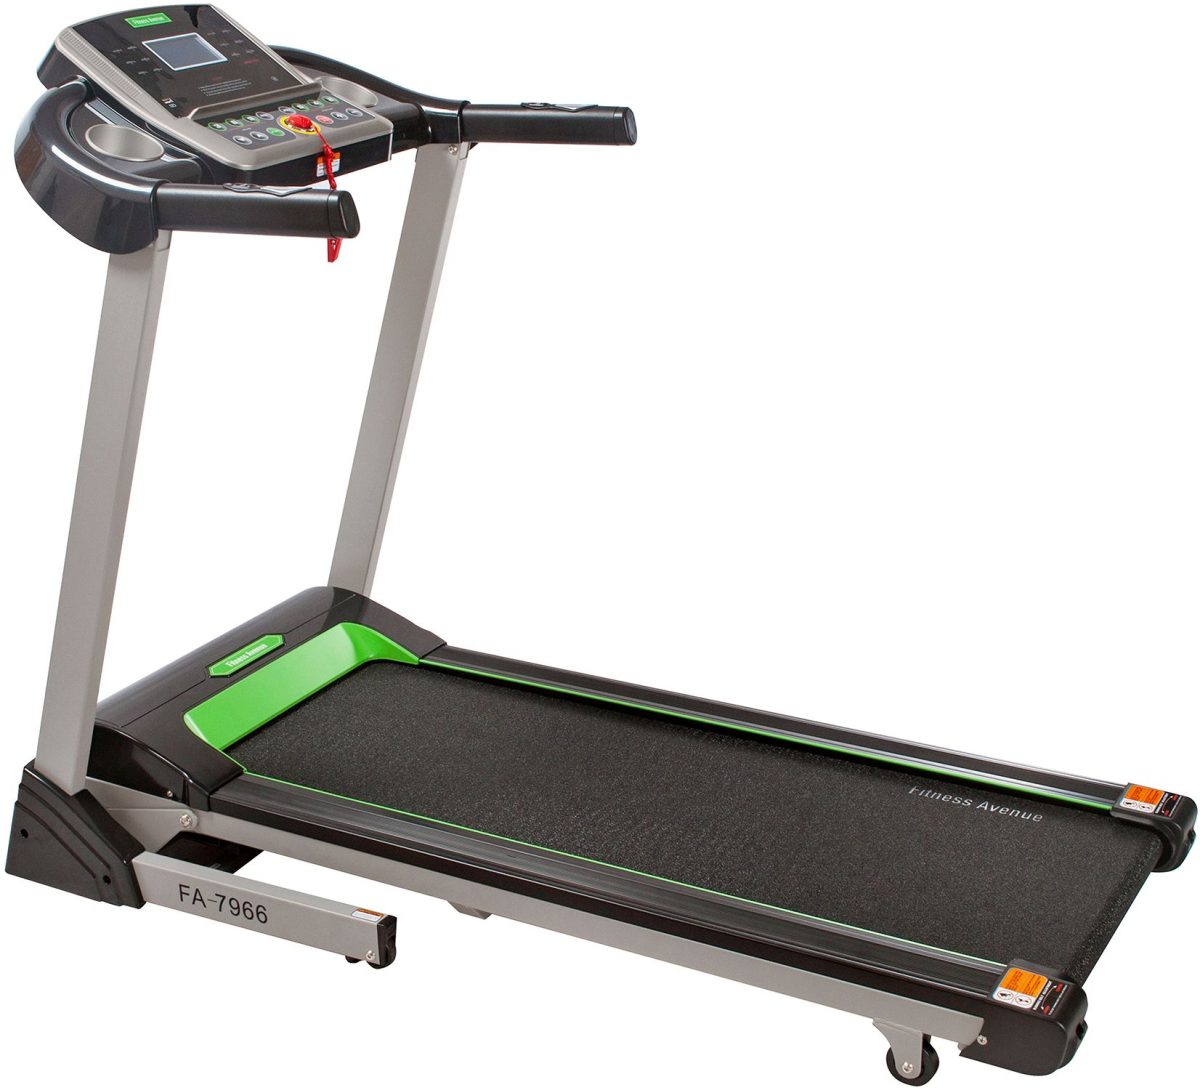 Fitness Avenue FA-7966 Treadmill, Gray